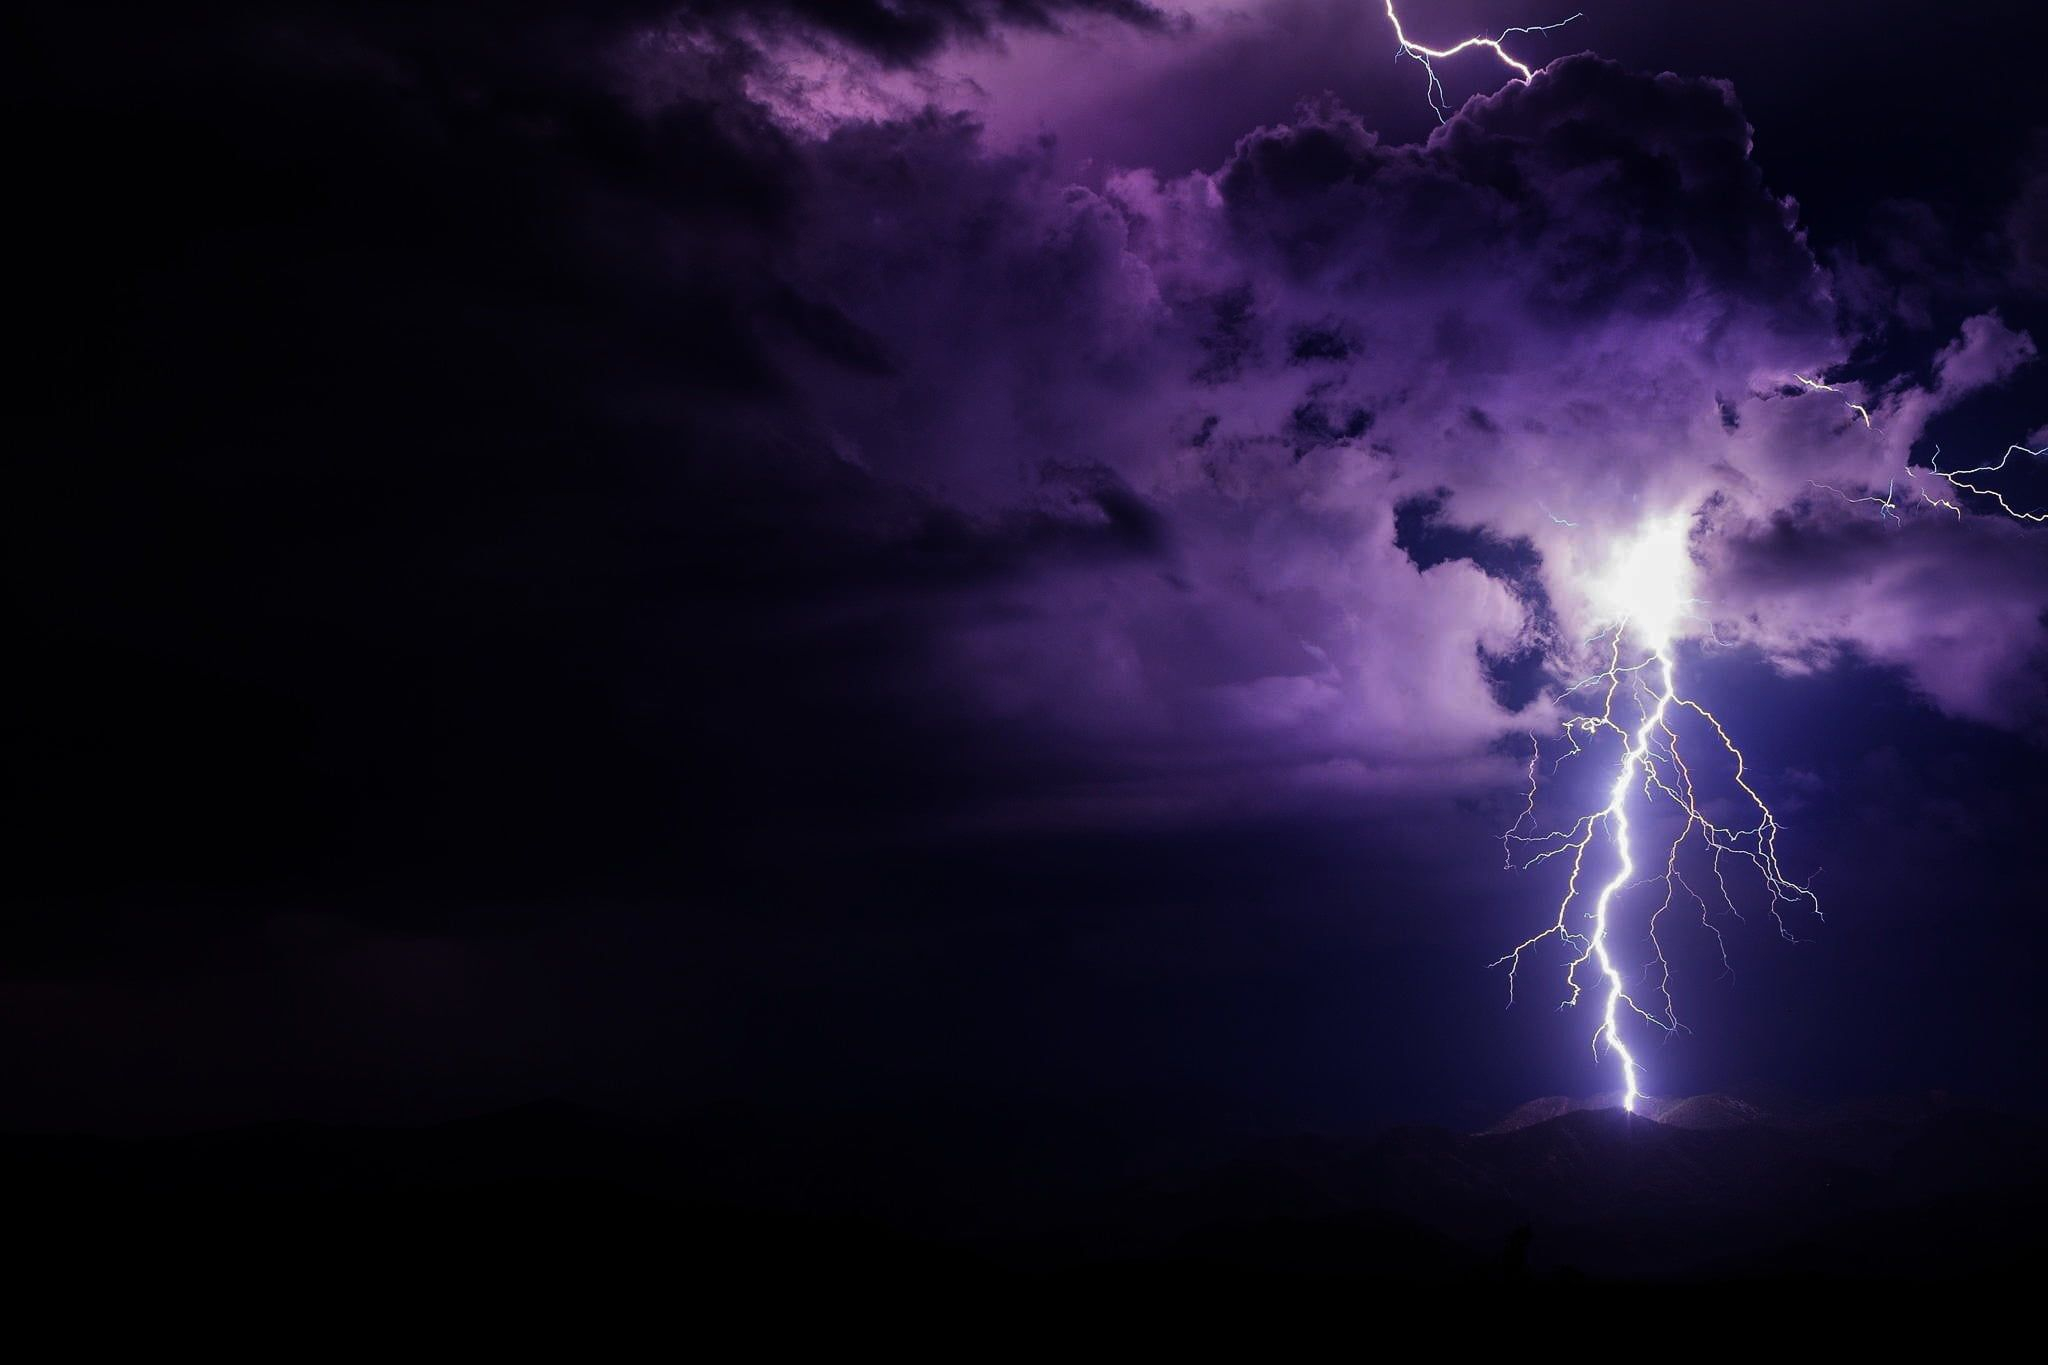 2048x1365 lightning wallpaper #lightning #purple #night #1080P #wallpaper #hdwallpaper #desktop | Lightning, Thunderstorm and lightning, Sky and clouds